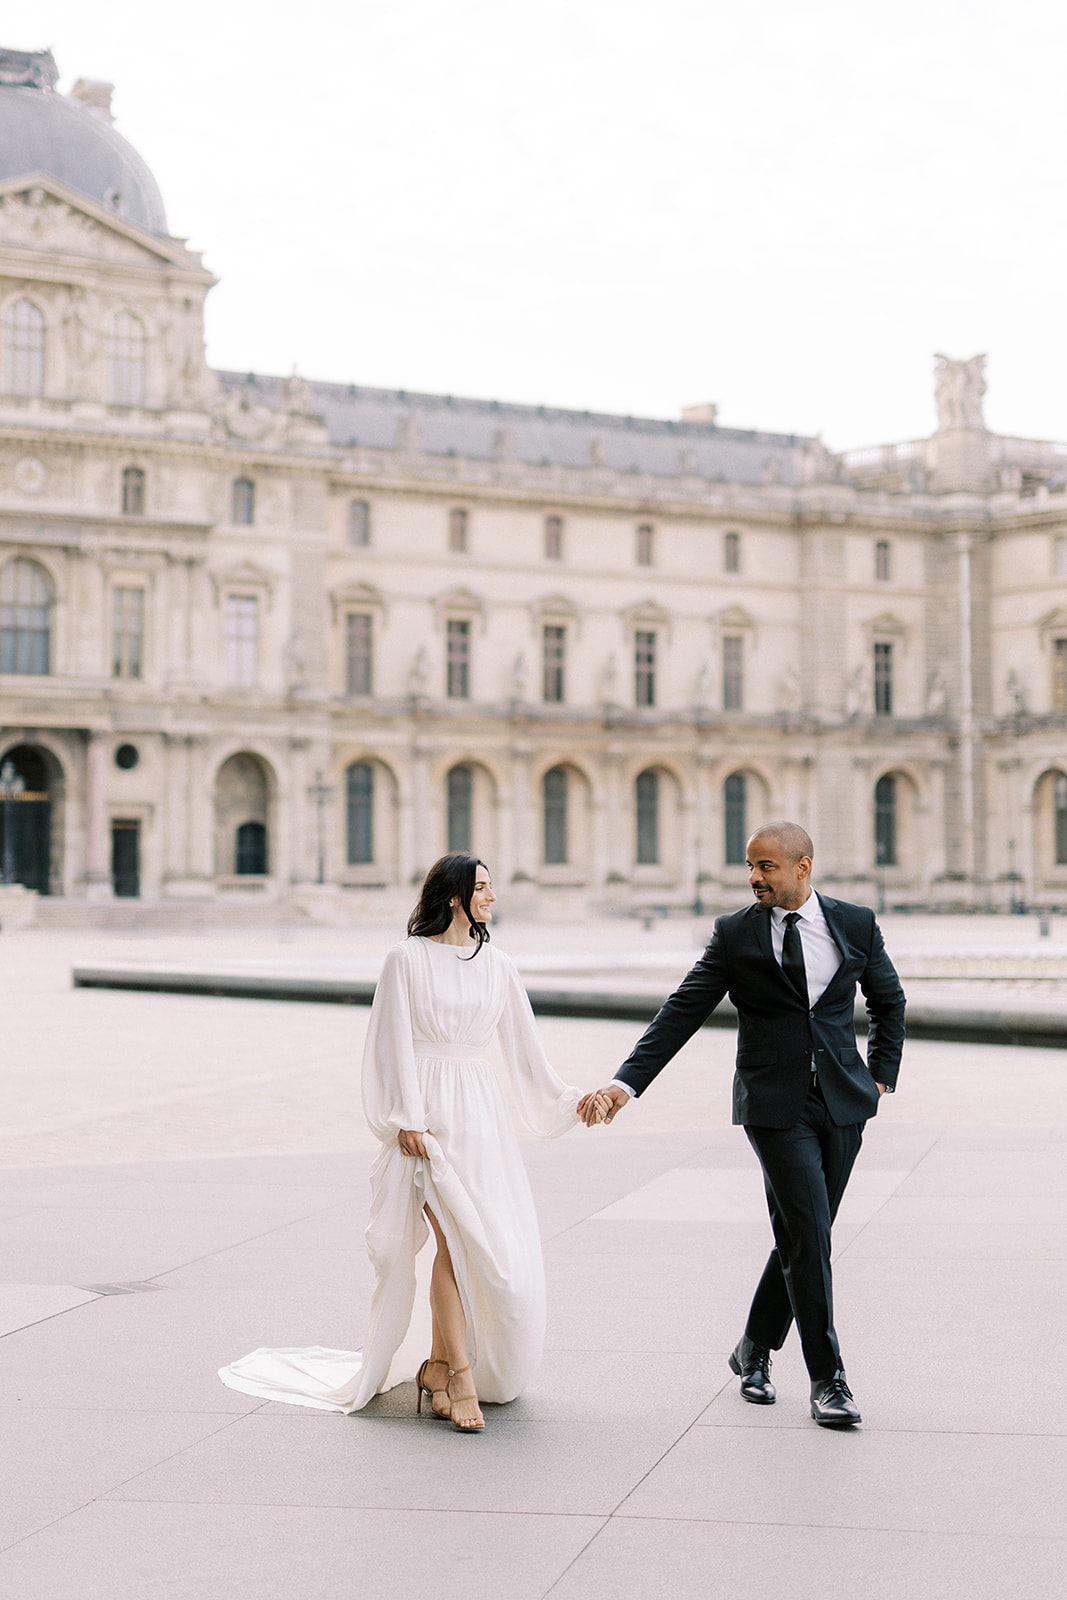 The Louvre Paris Engagement photos | Chernogorov Photography Destination Wedding Photographers